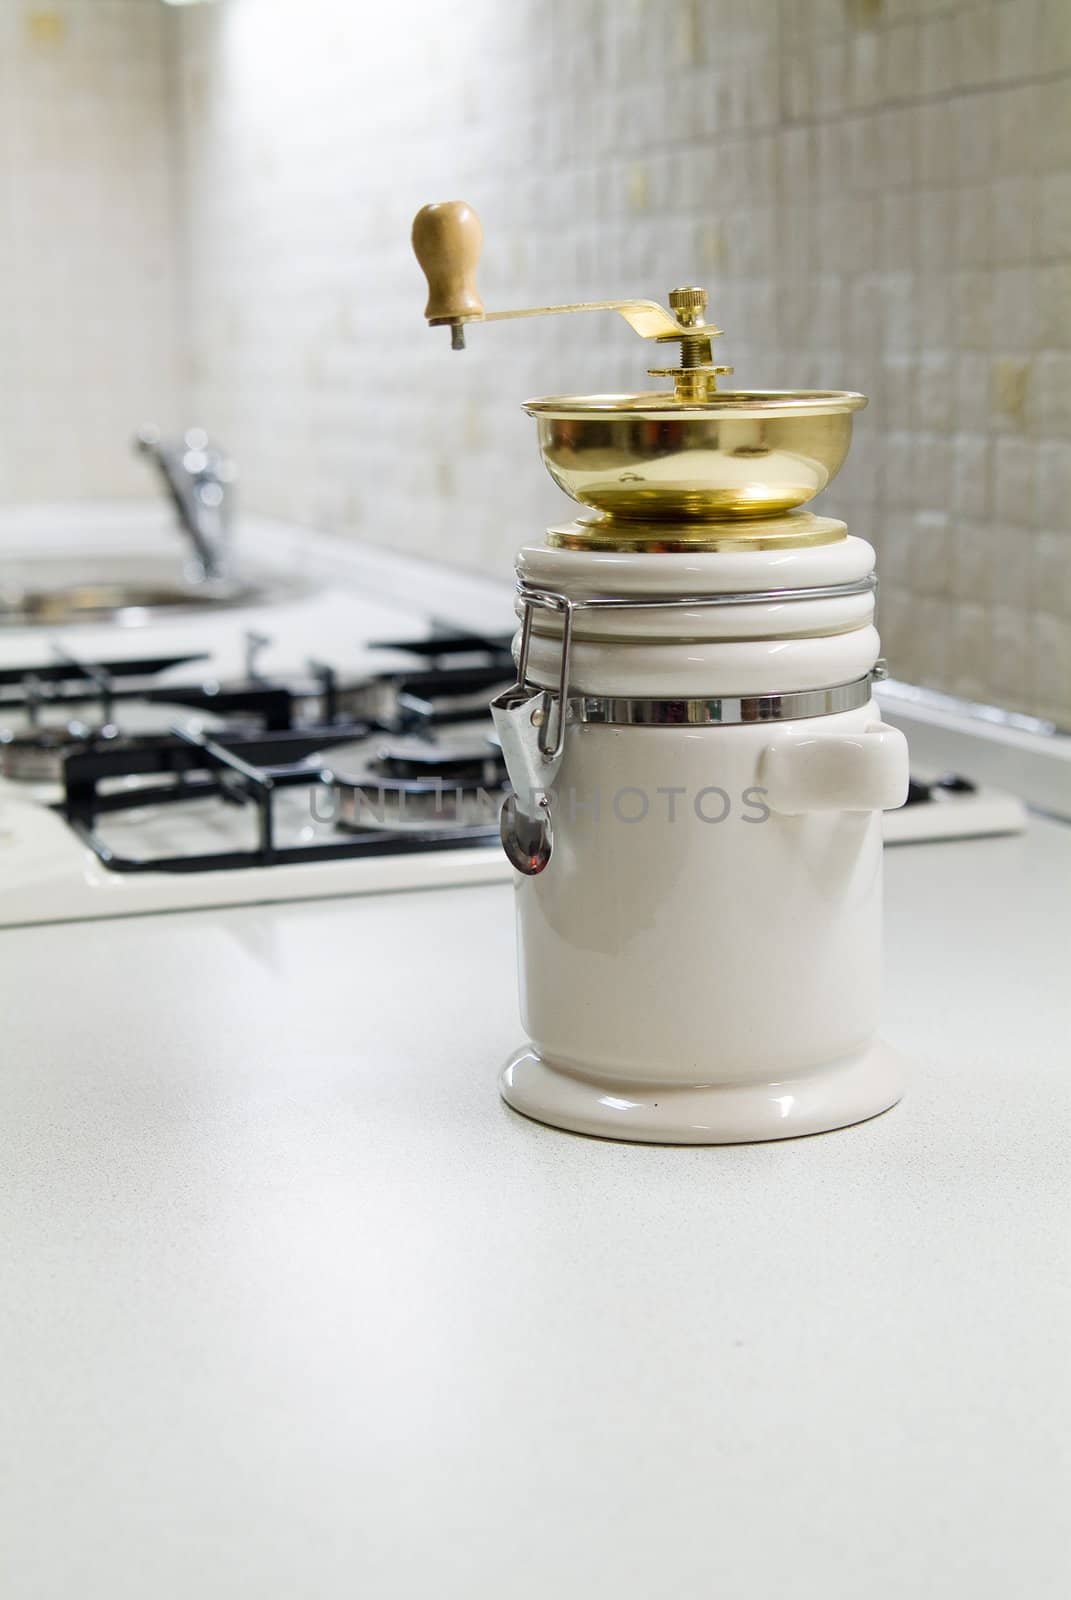 Coffe grinder near gas stove on kitchen